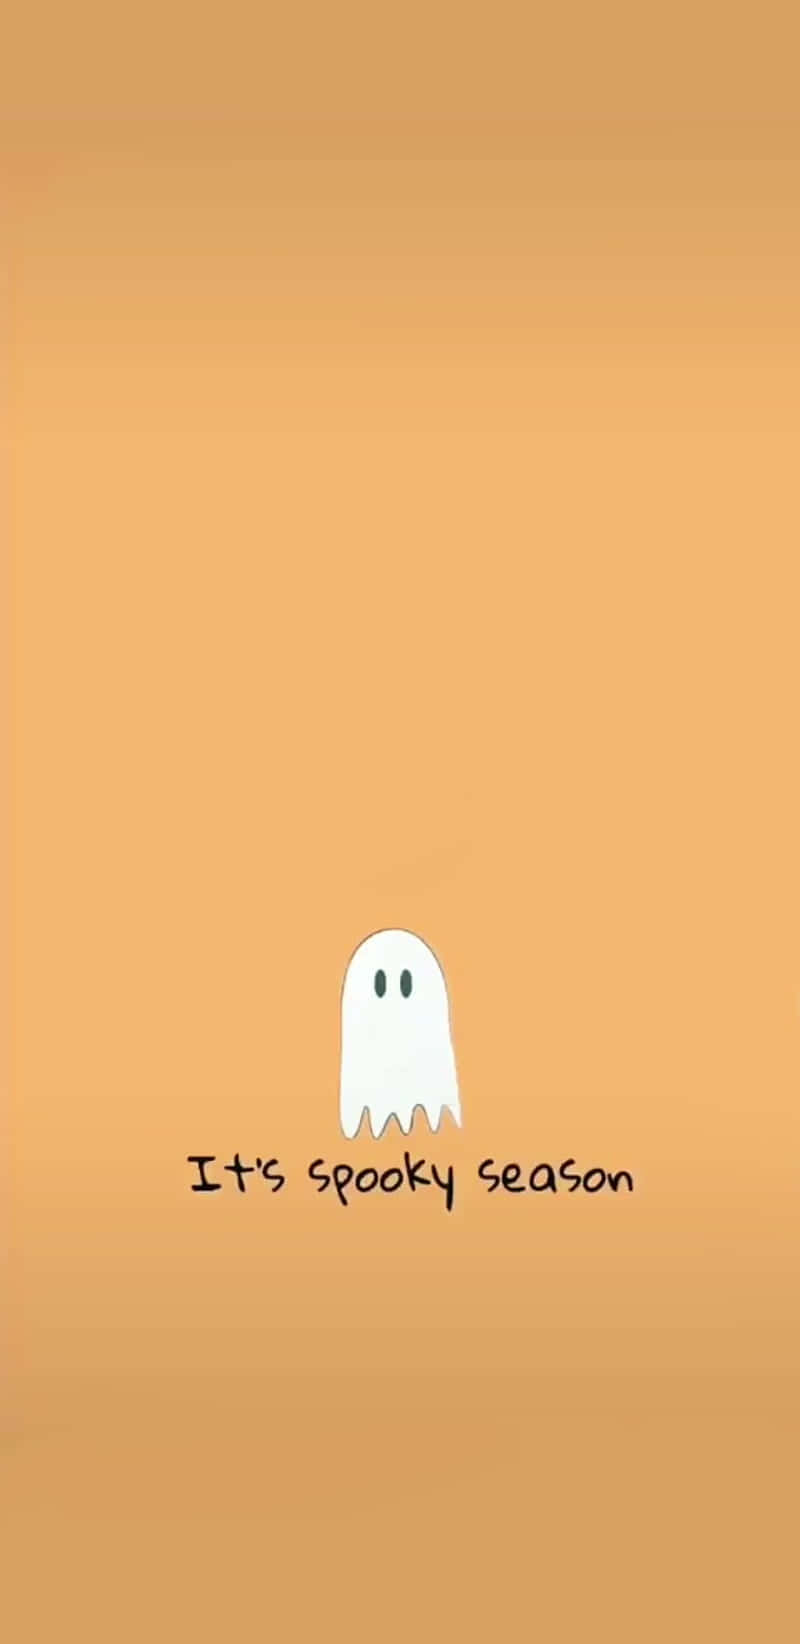 Download Boo And Stuff Spooky Season Wallpaper | Wallpapers.com